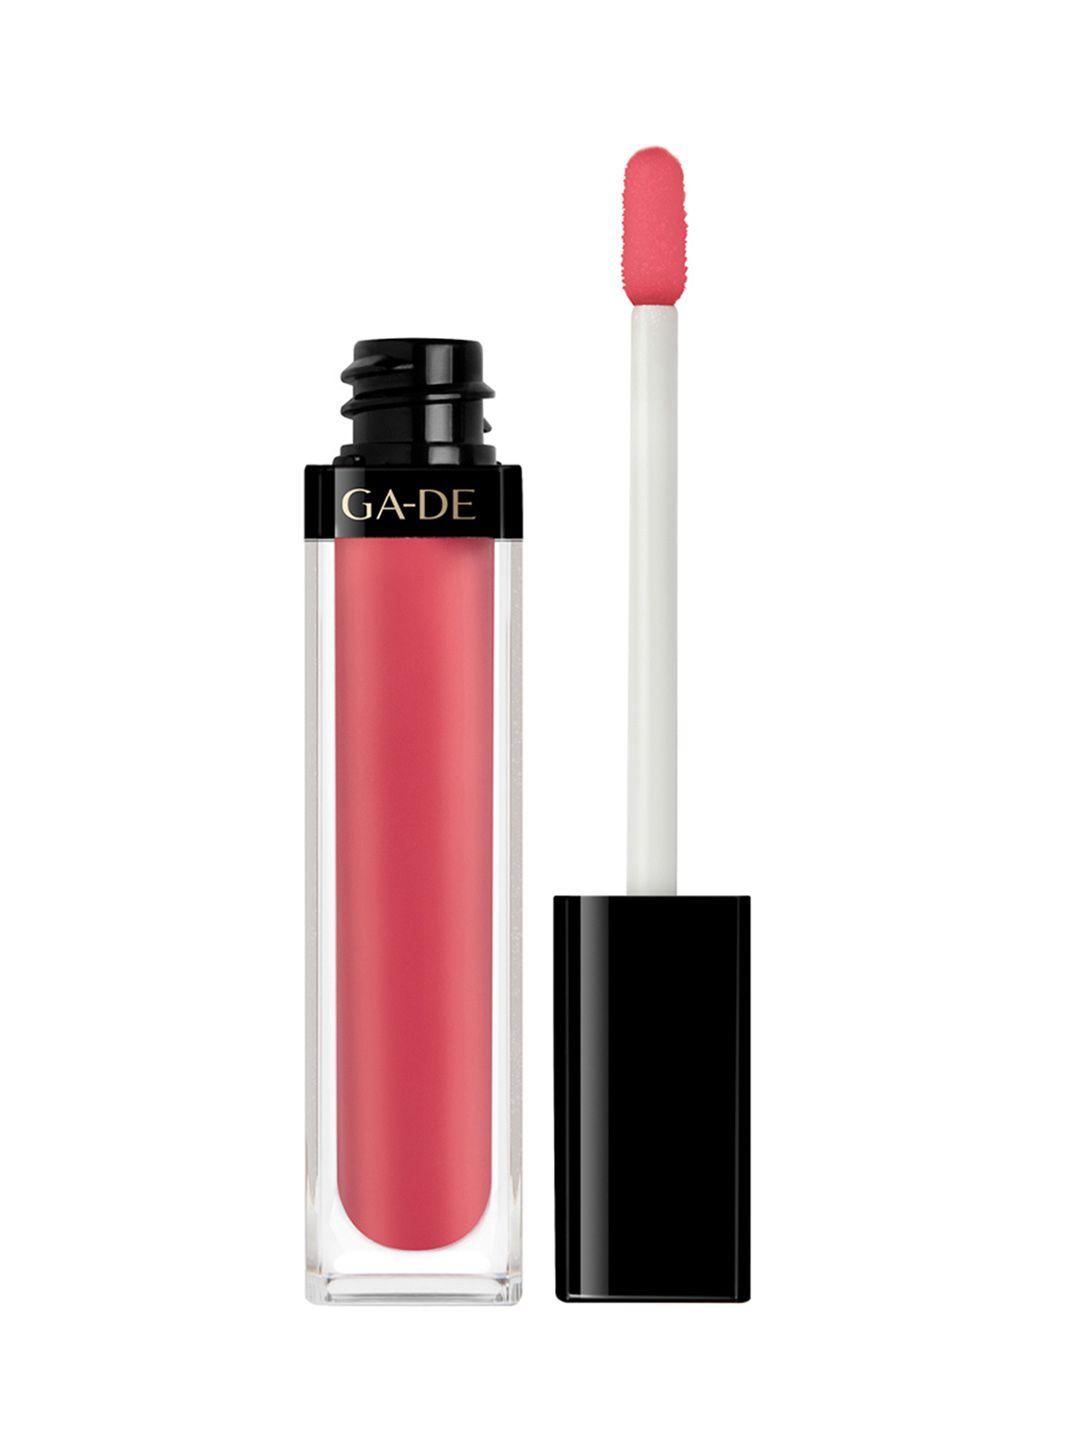 ga-de long lasting & moisturizing crystal lights lip gloss 6ml - berry light 821